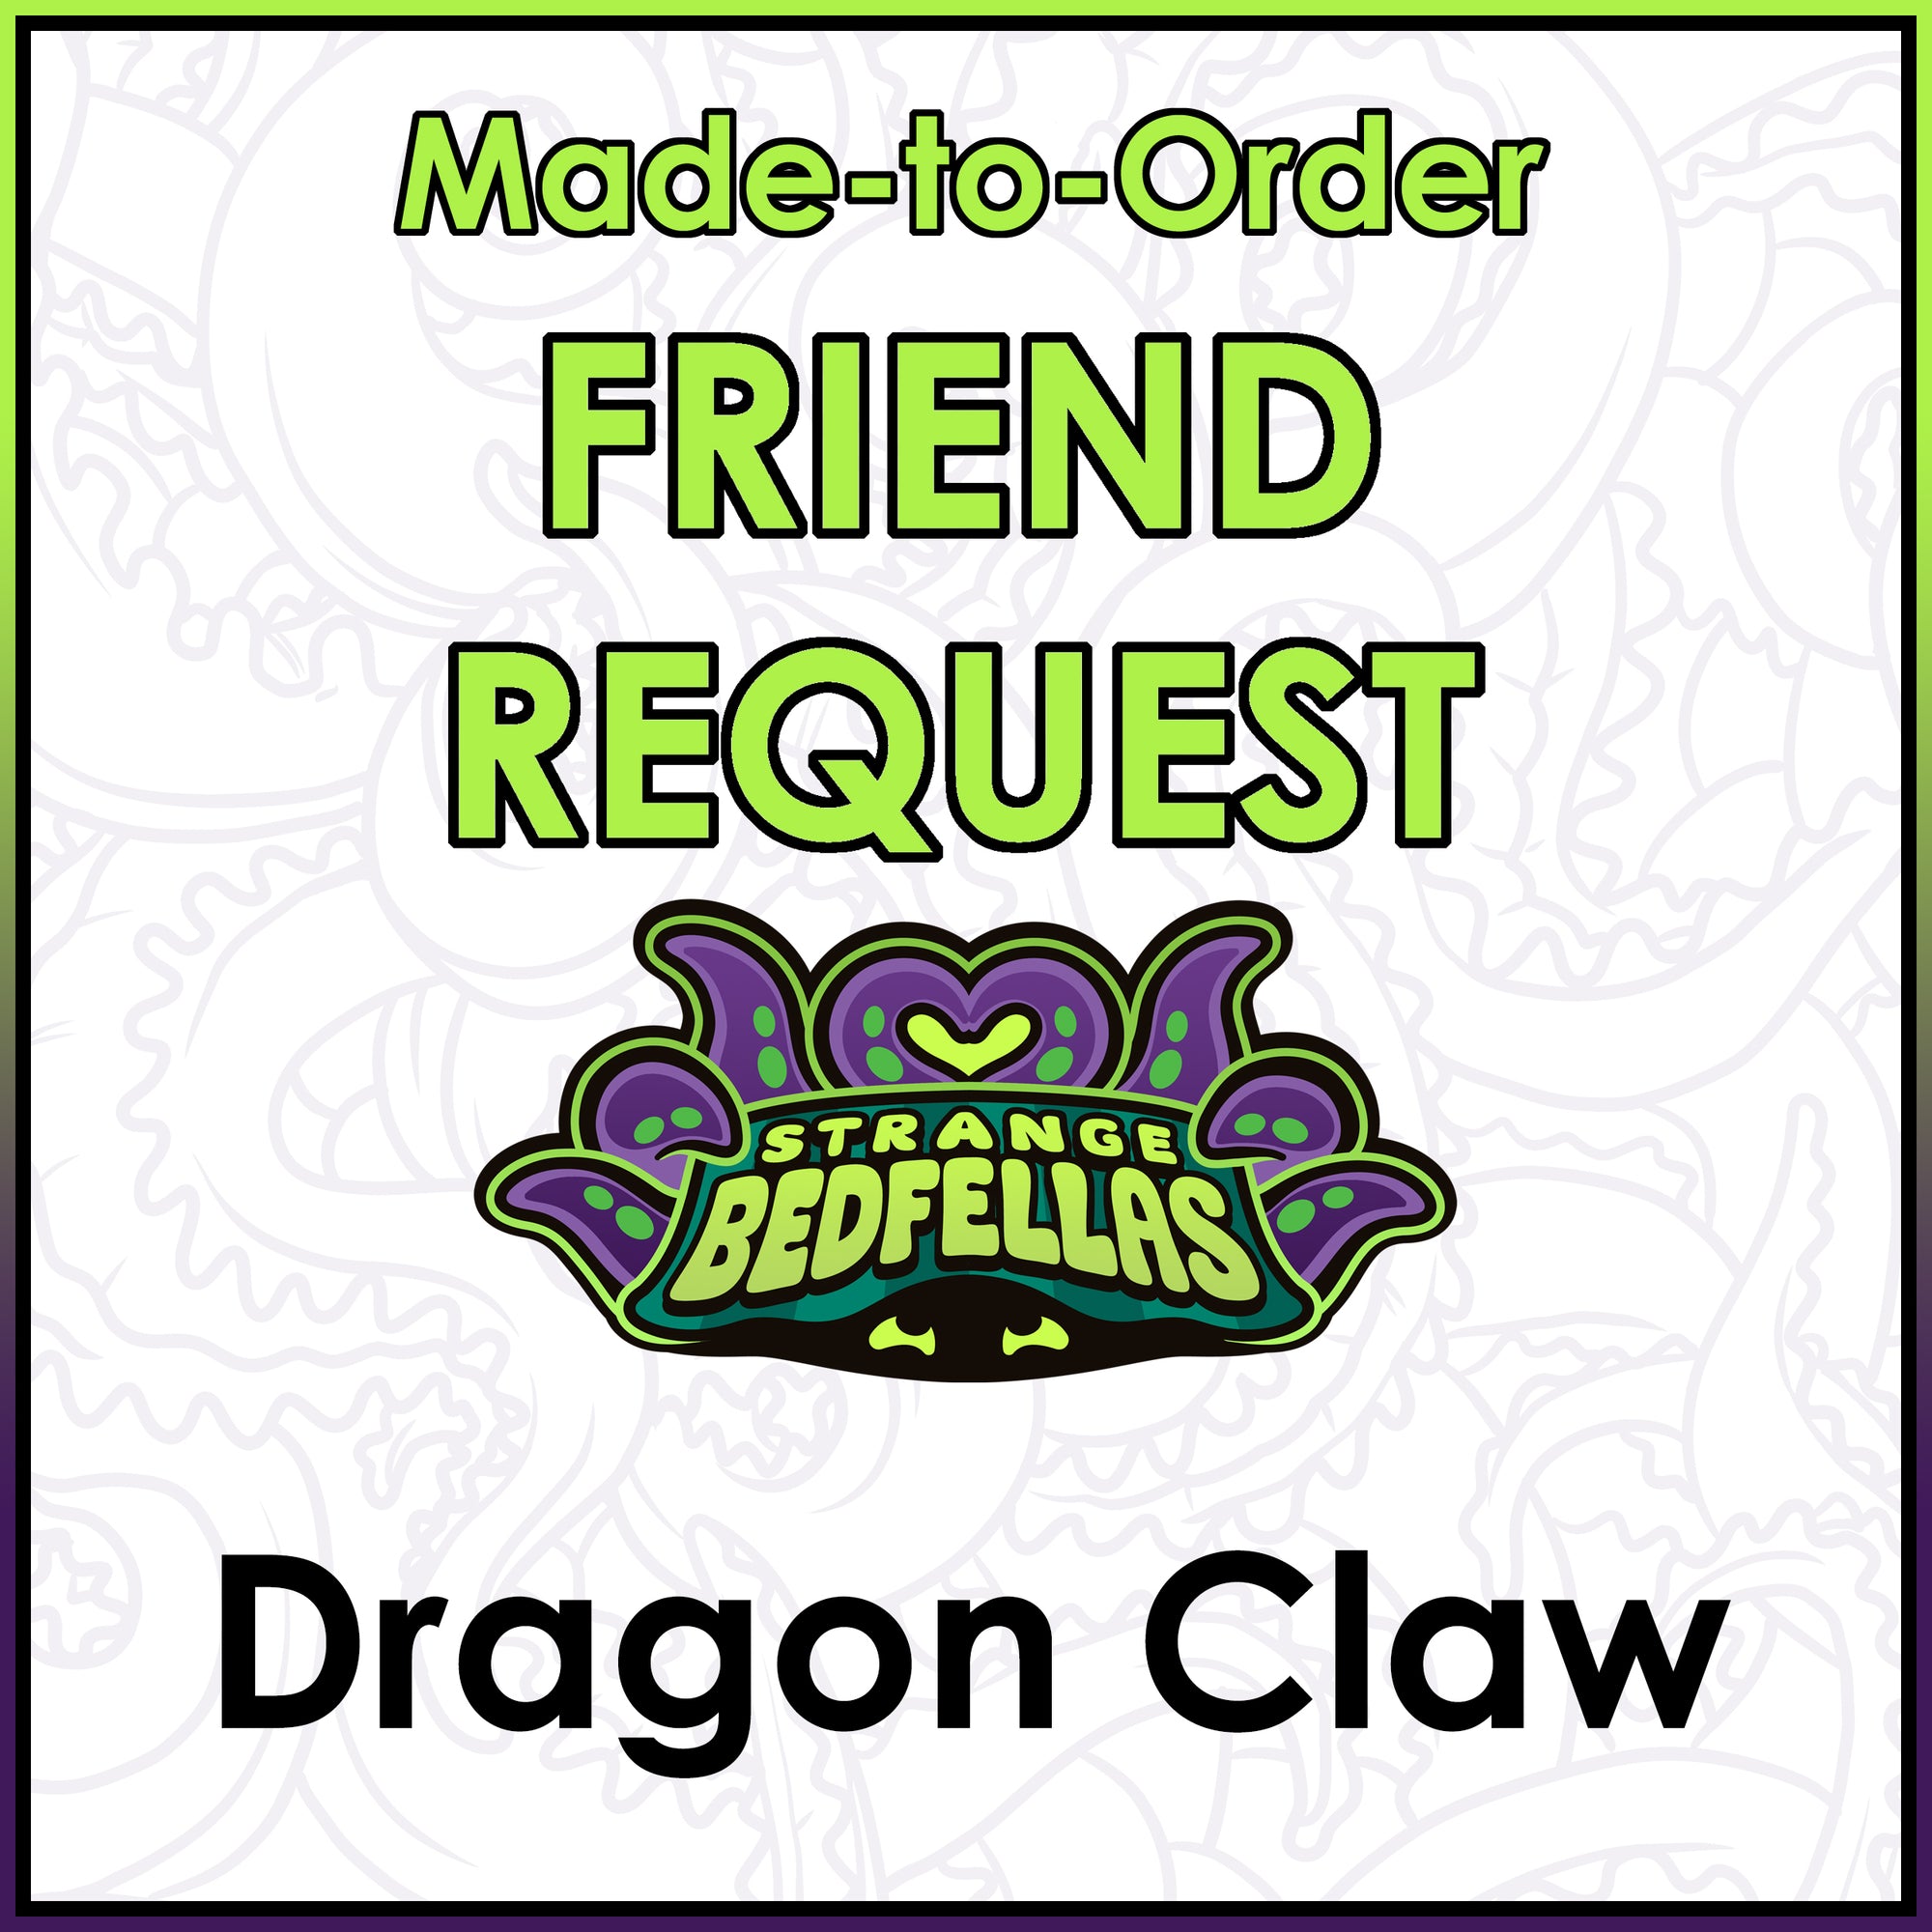 Friend Request - Dragon Claw